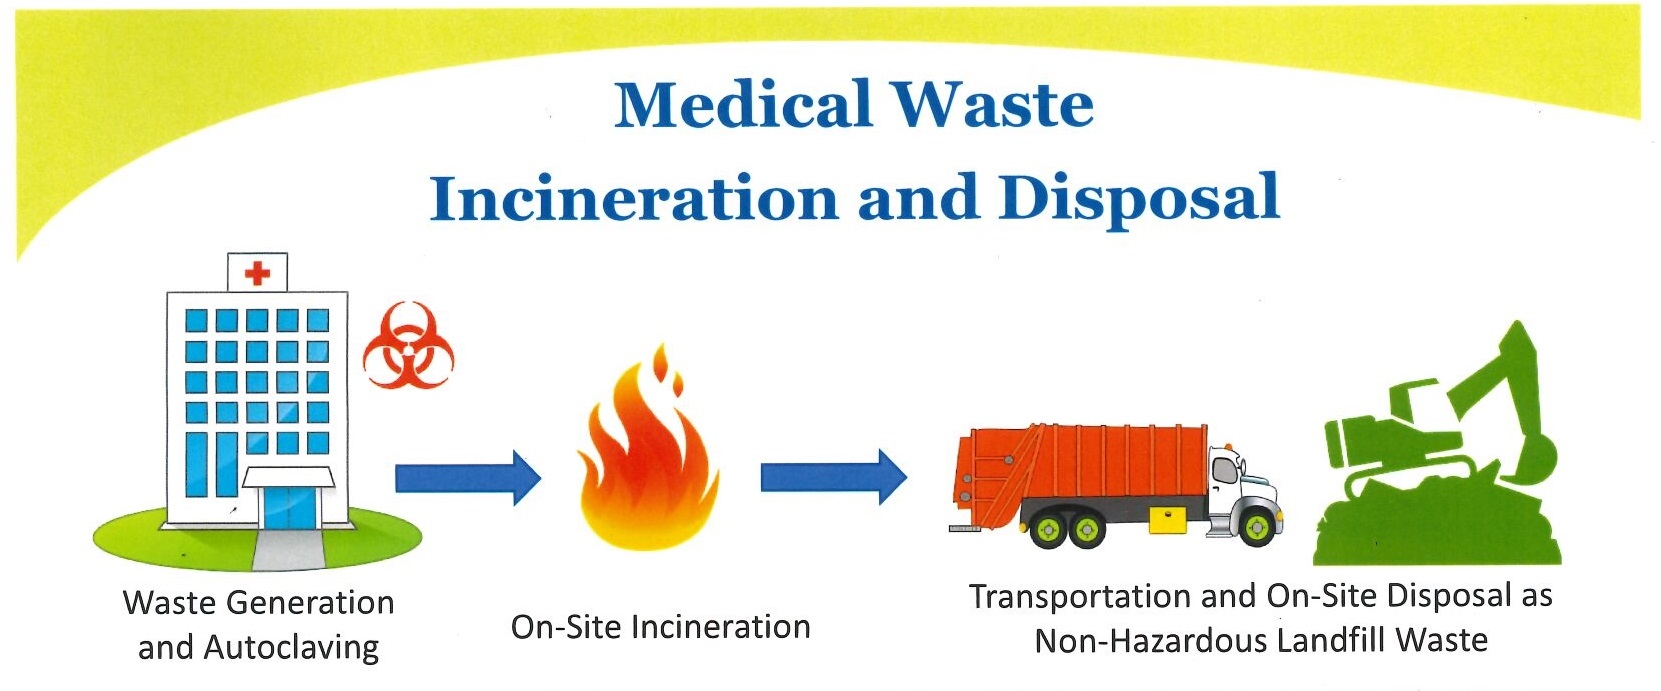 medical waste incinerator,clinical waste incinerator,eco friendly incinerator,medical incinerator,medical waste disposal and incineration